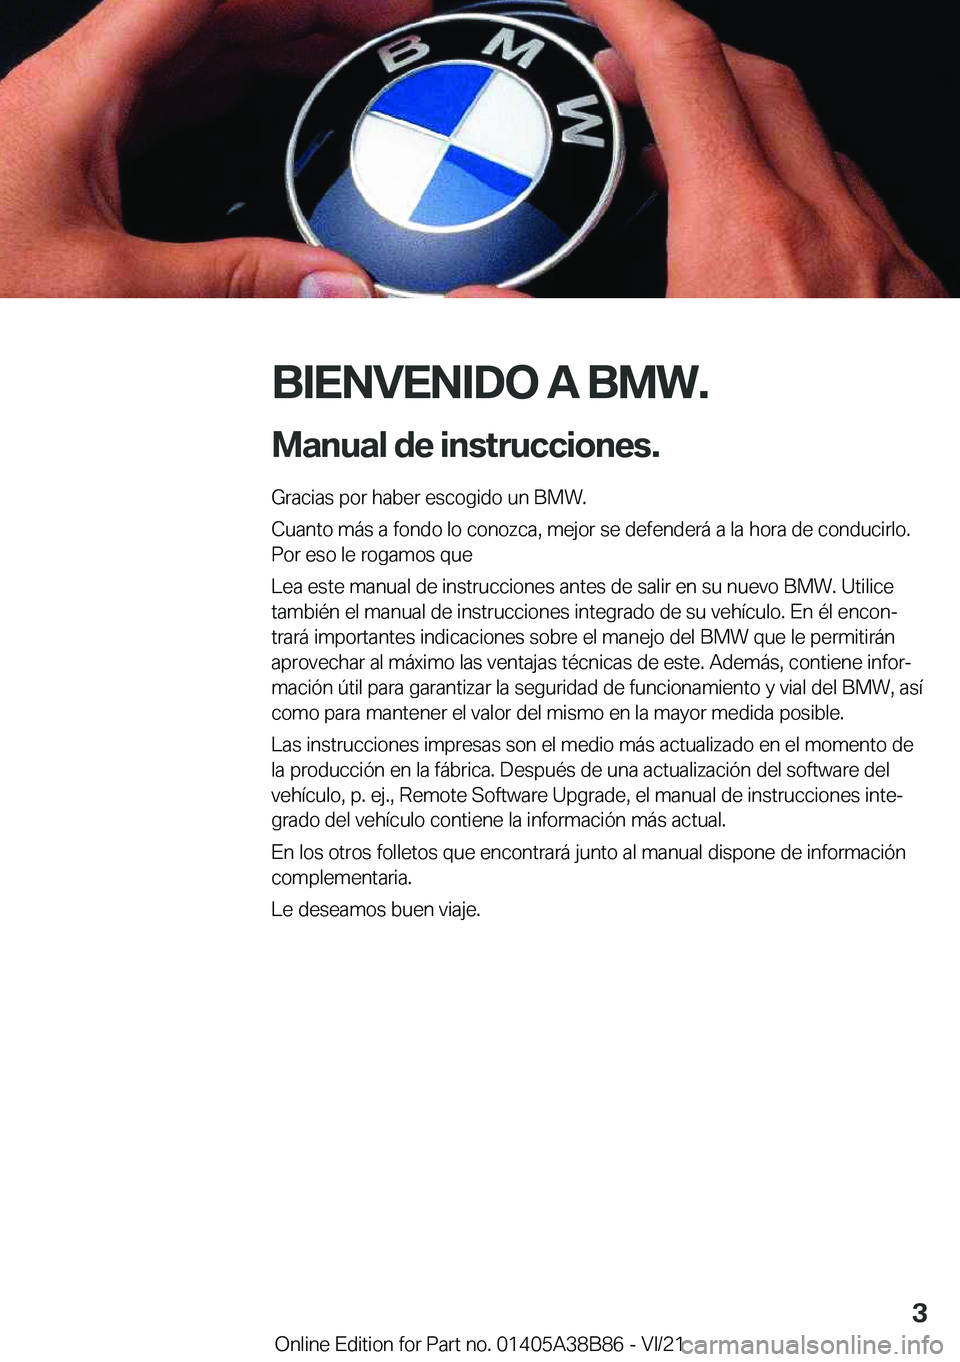 BMW M4 2022  Manuales de Empleo (in Spanish) �B�I�E�N�V�E�N�I�D�O��A��B�M�W�.
�M�a�n�u�a�l��d�e��i�n�s�t�r�u�c�c�i�o�n�e�s�. �G�r�a�c�i�a�s��p�o�r��h�a�b�e�r��e�s�c�o�g�i�d�o��u�n��B�M�W�.
�C�u�a�n�t�o��m�